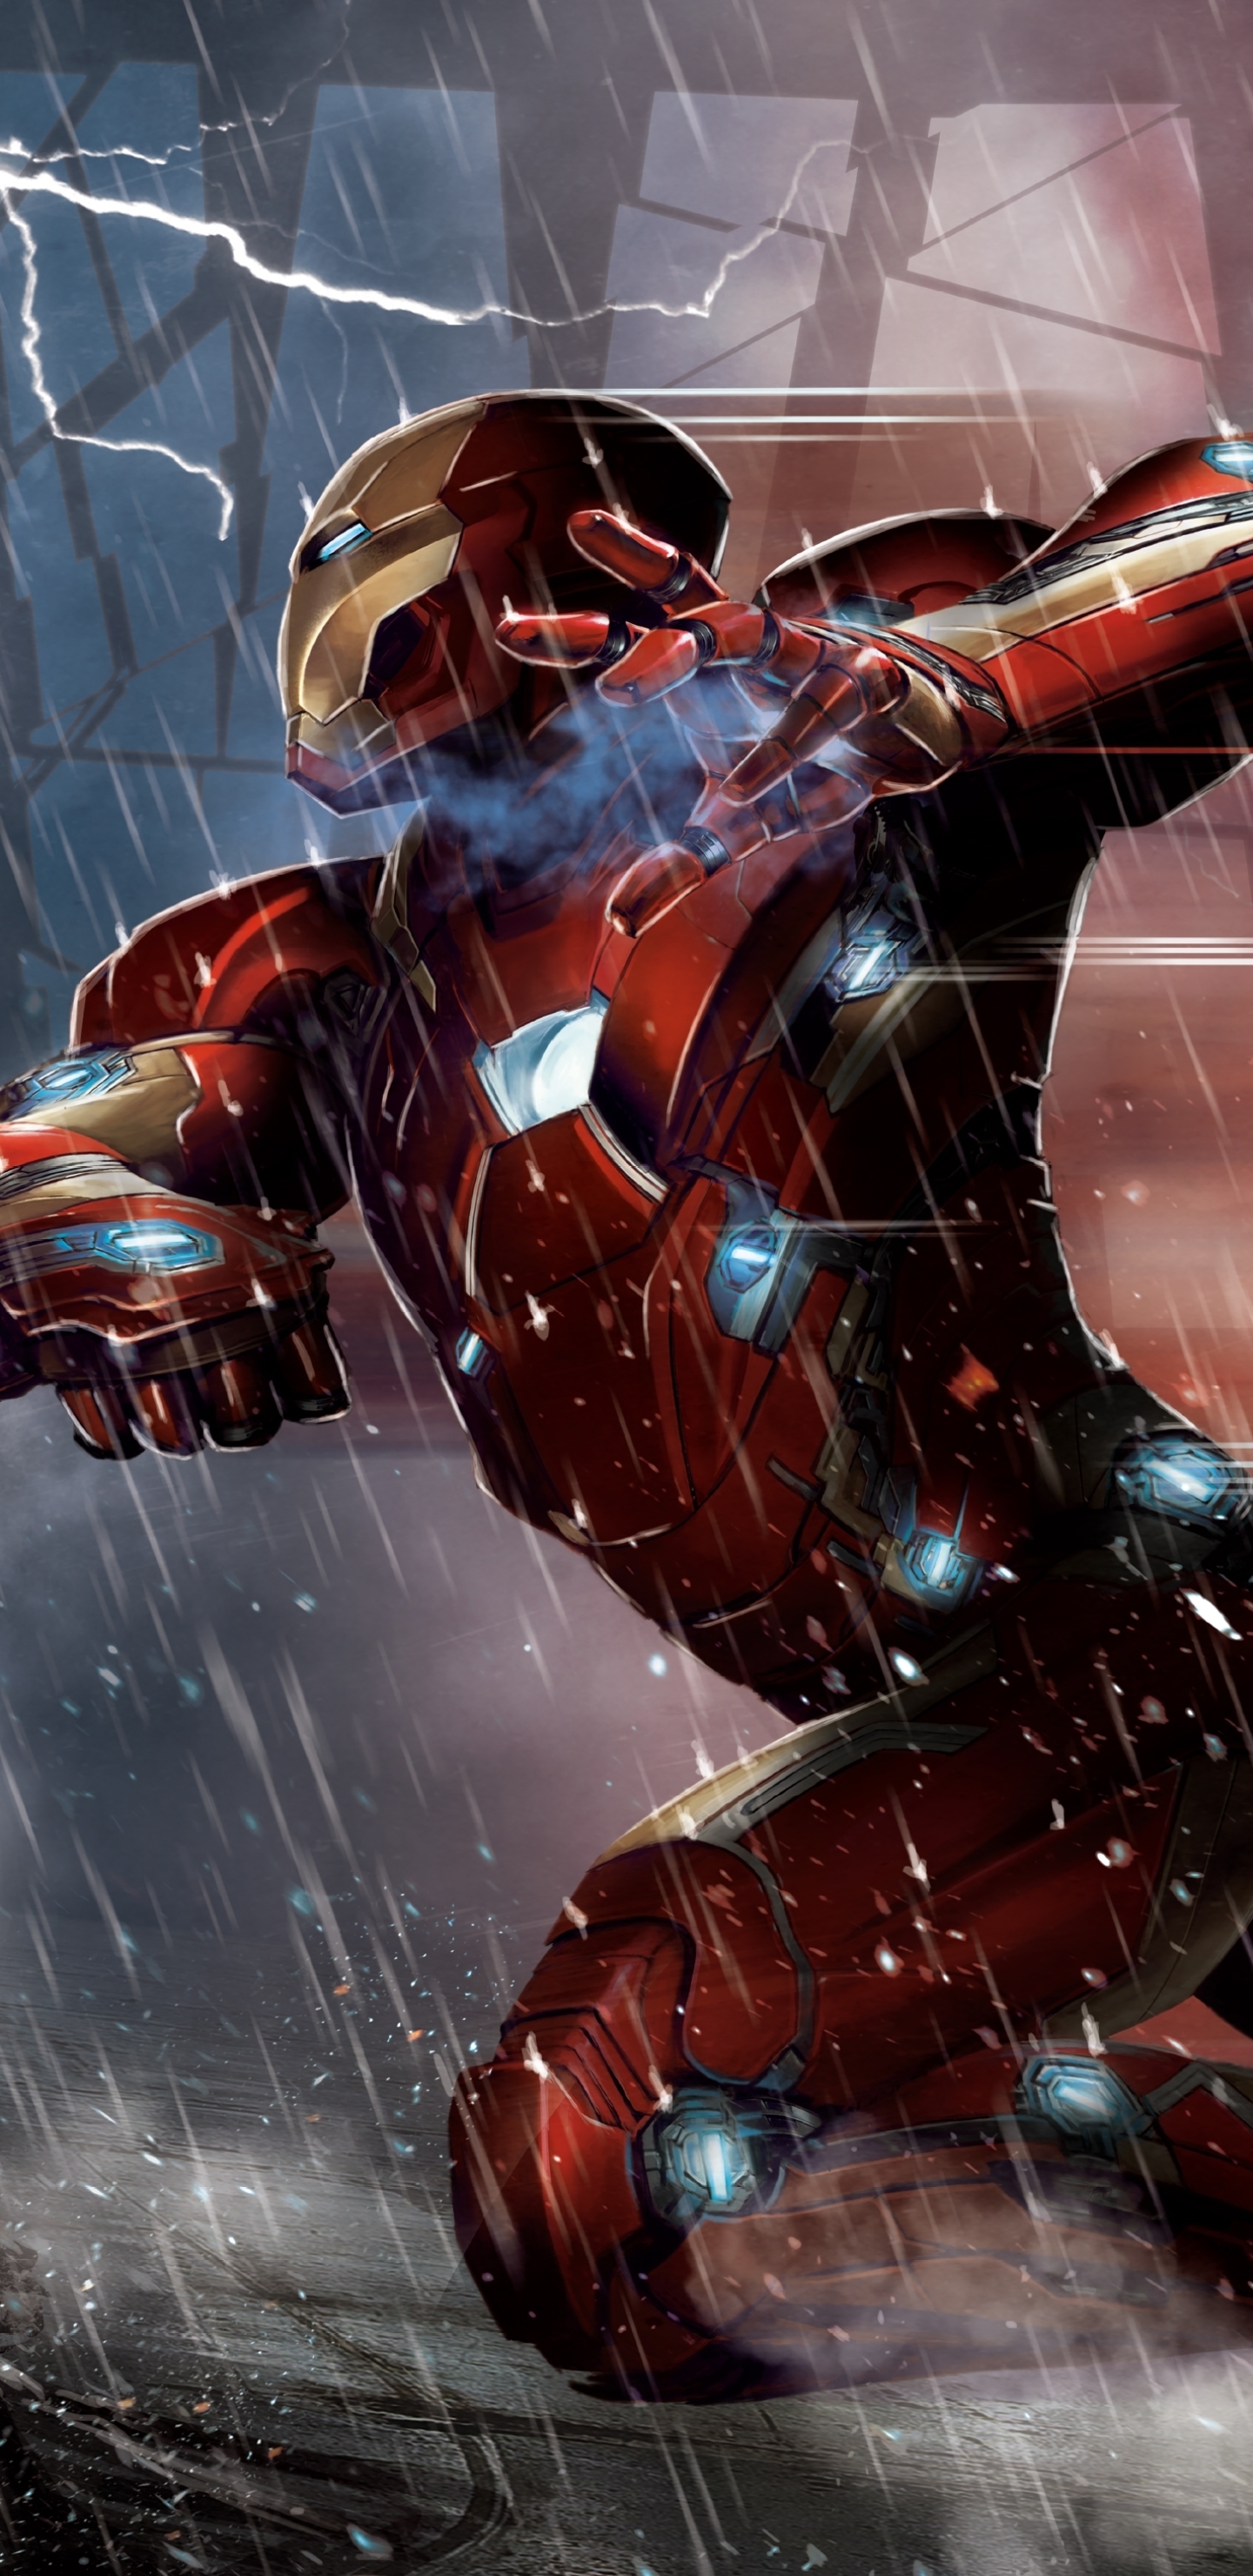 Iron Man Suit HD Avengers IPhone Wallpaper Iphoneswallpapers Com  IPhone  Wallpapers  iPhone Wallpapers